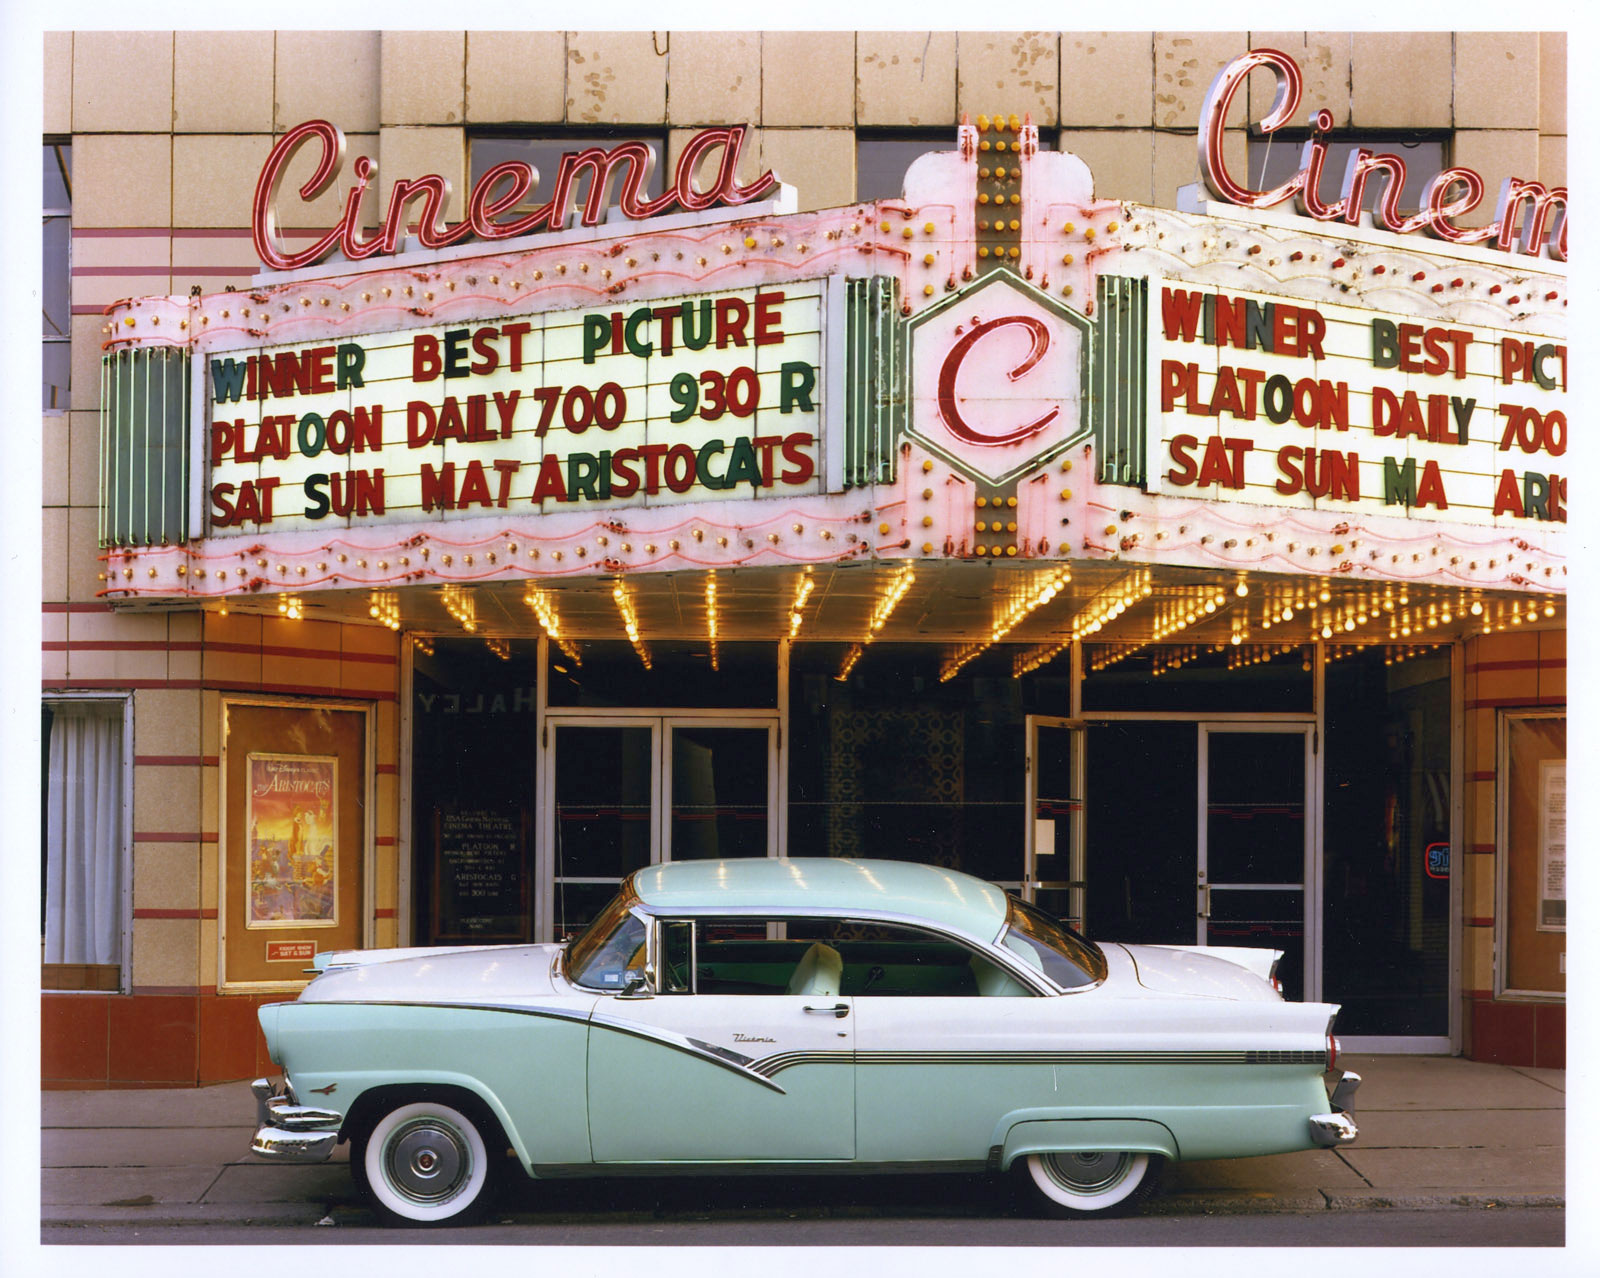 1956 Ford Victoria, Cinema Endicott, Endicott, NY, c. 1987